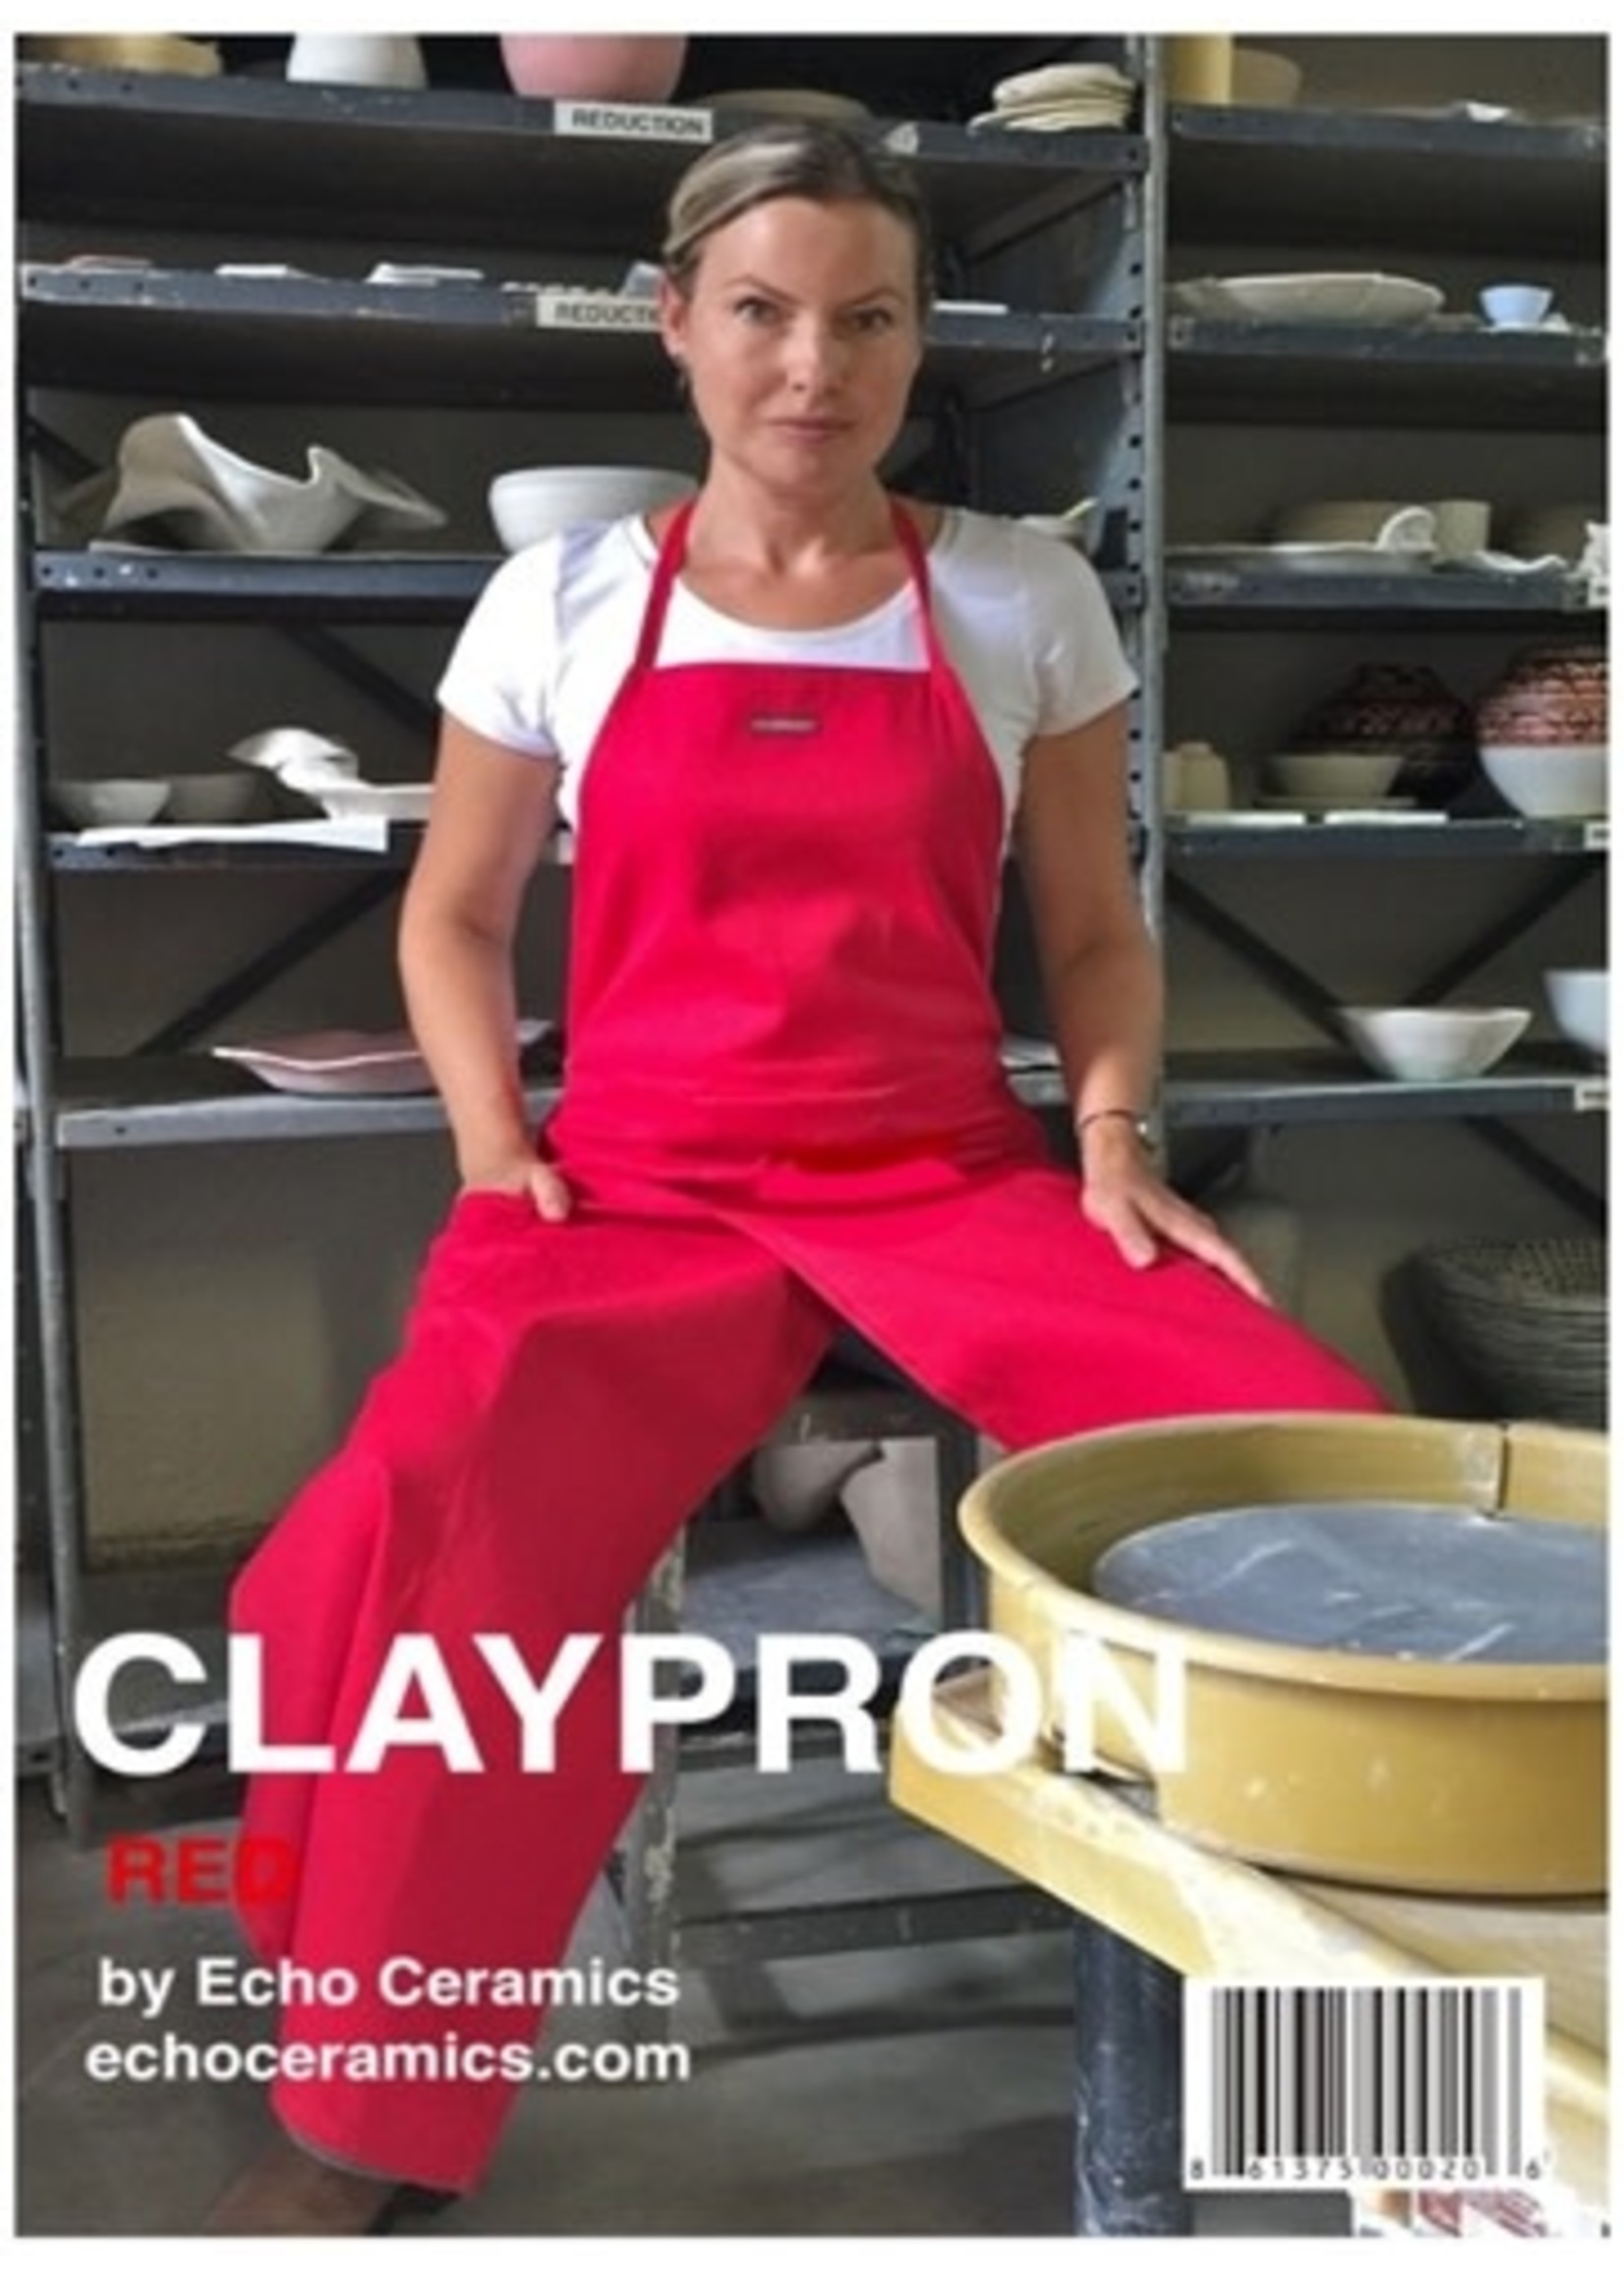 Echo Ceramics Claypron : RED Potters Apron by Echo Ceramics